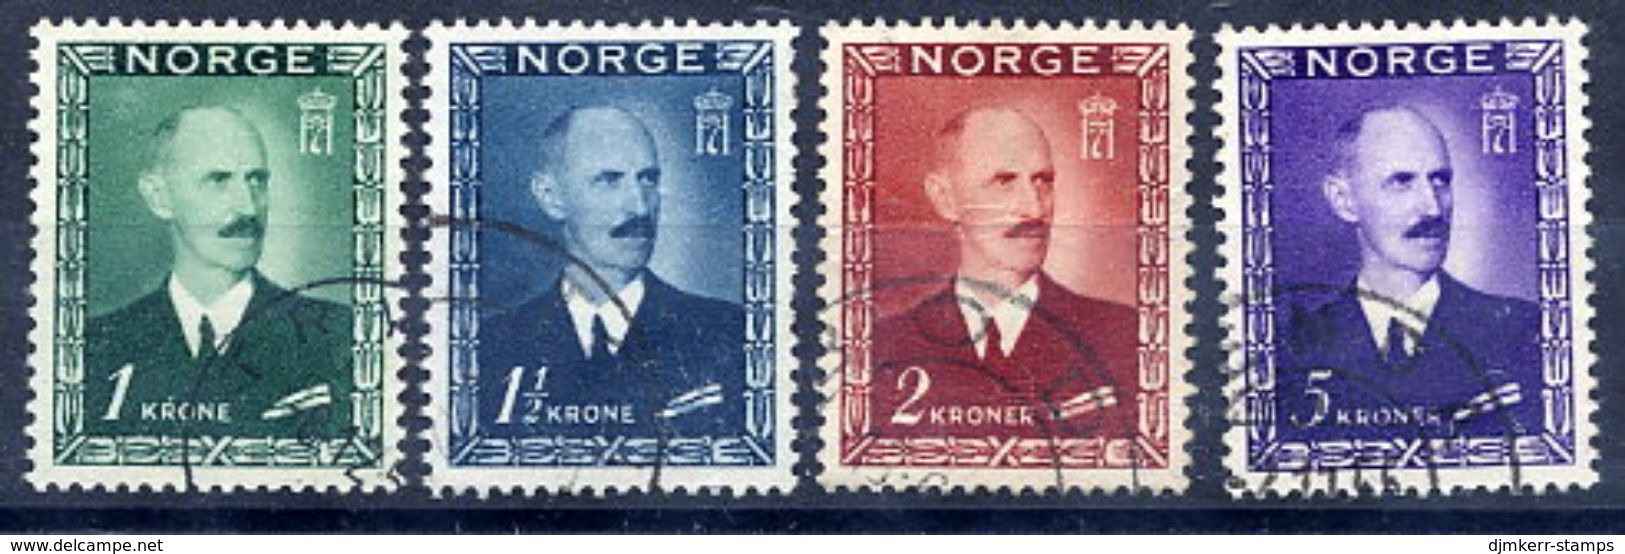 NORWAY 1946 King Haakon VII Definitive Kroner Values, Used.  SG380-83, Michel 315-18 - Gebruikt